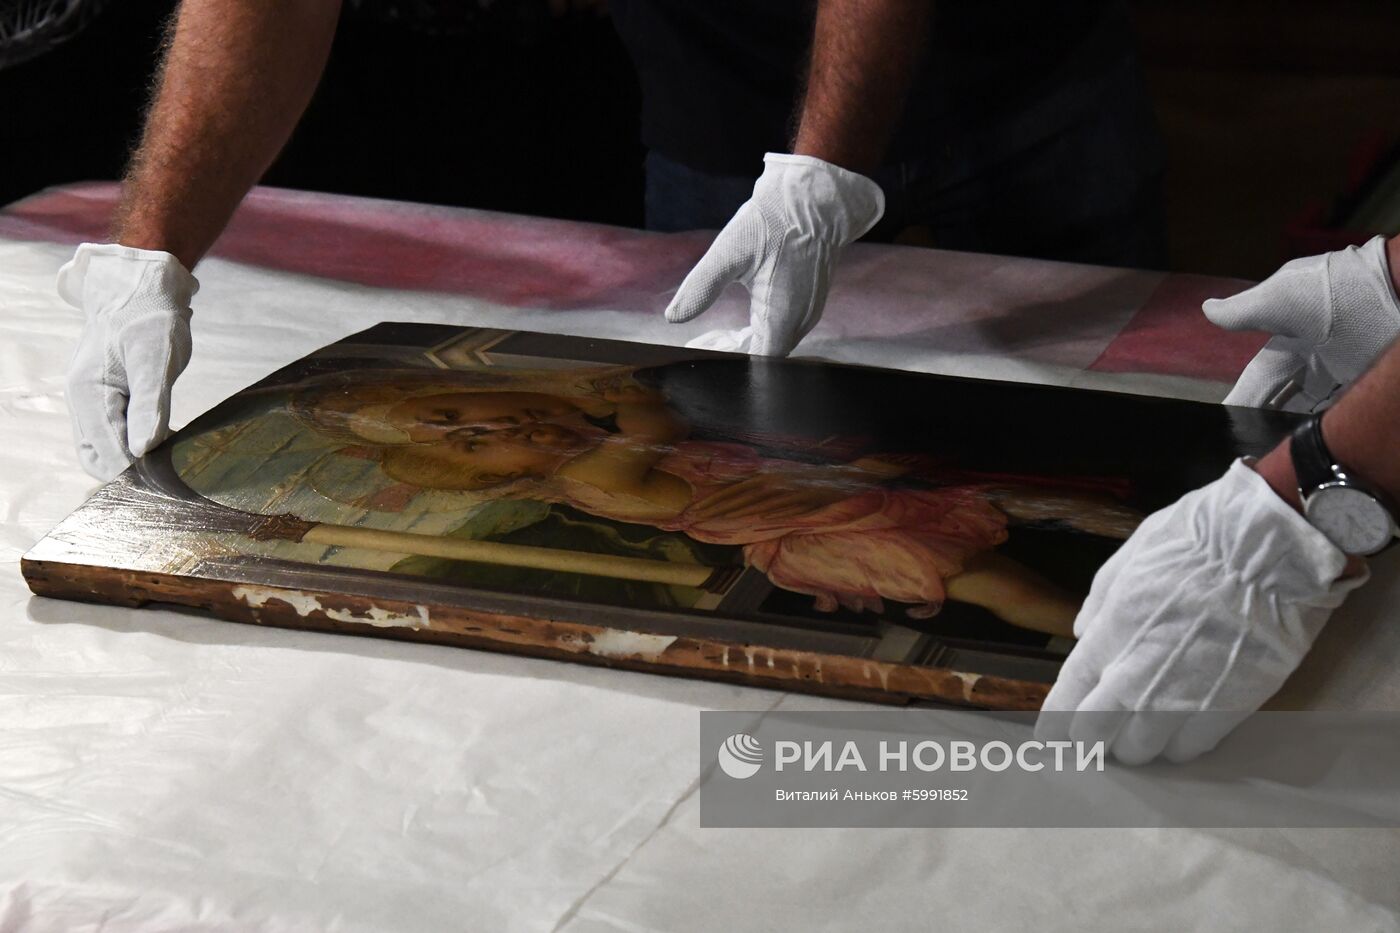 Картину Боттичелли "Мадонна делла Лоджиа" привезли во Владивосток